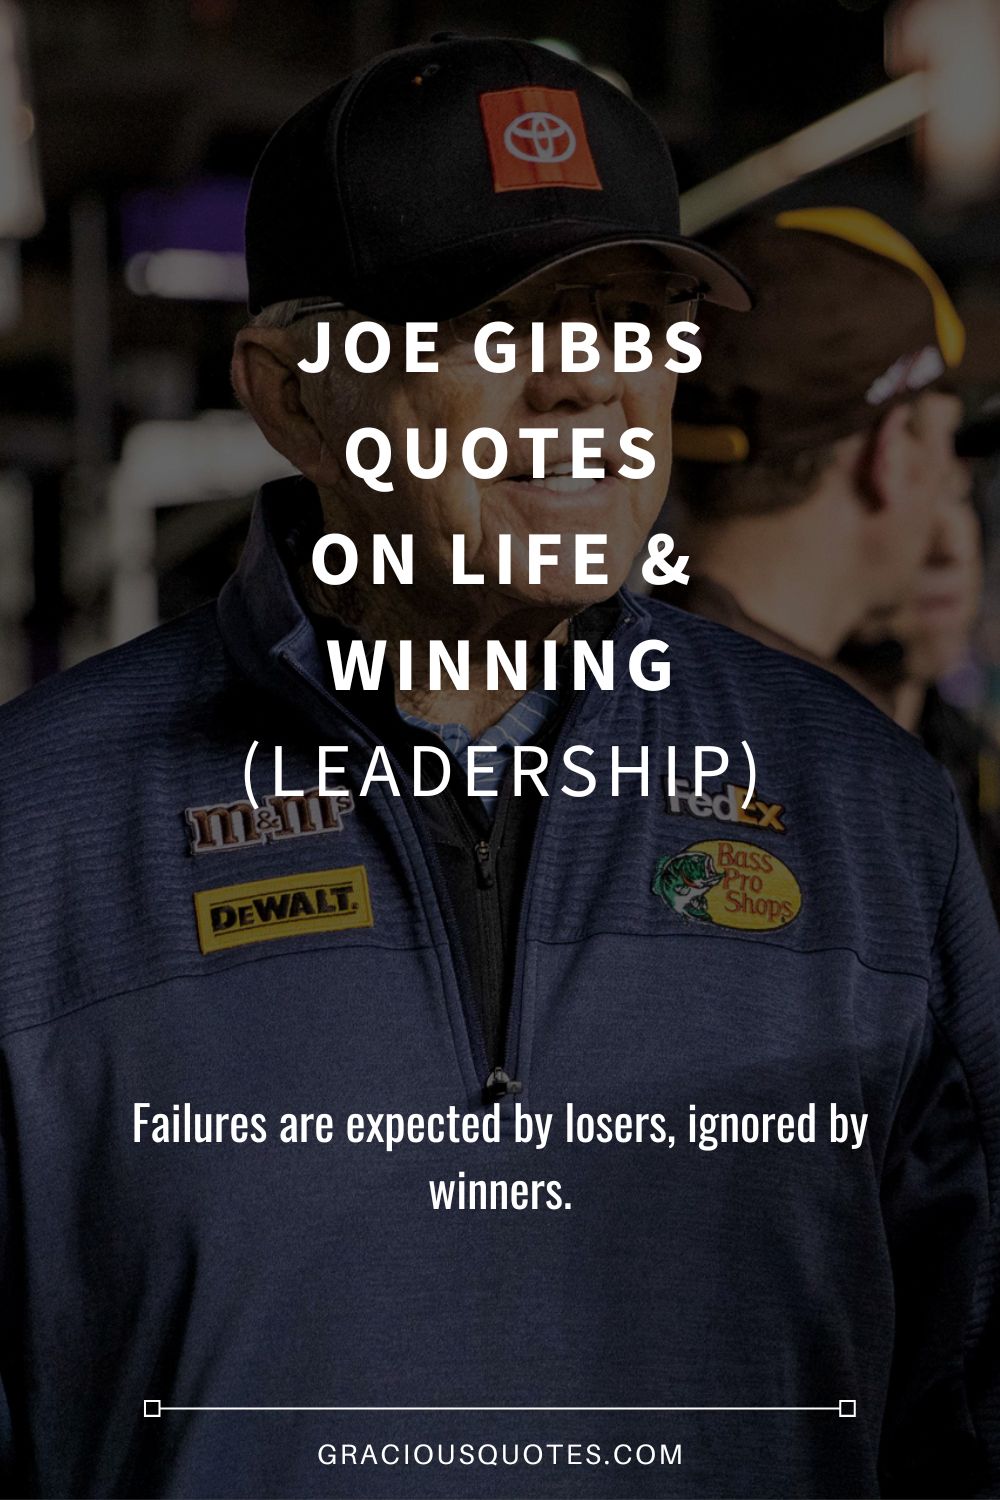 Joe Gibbs Quotes on Life & Winning (LEADERSHIP) - Gracious Quotes